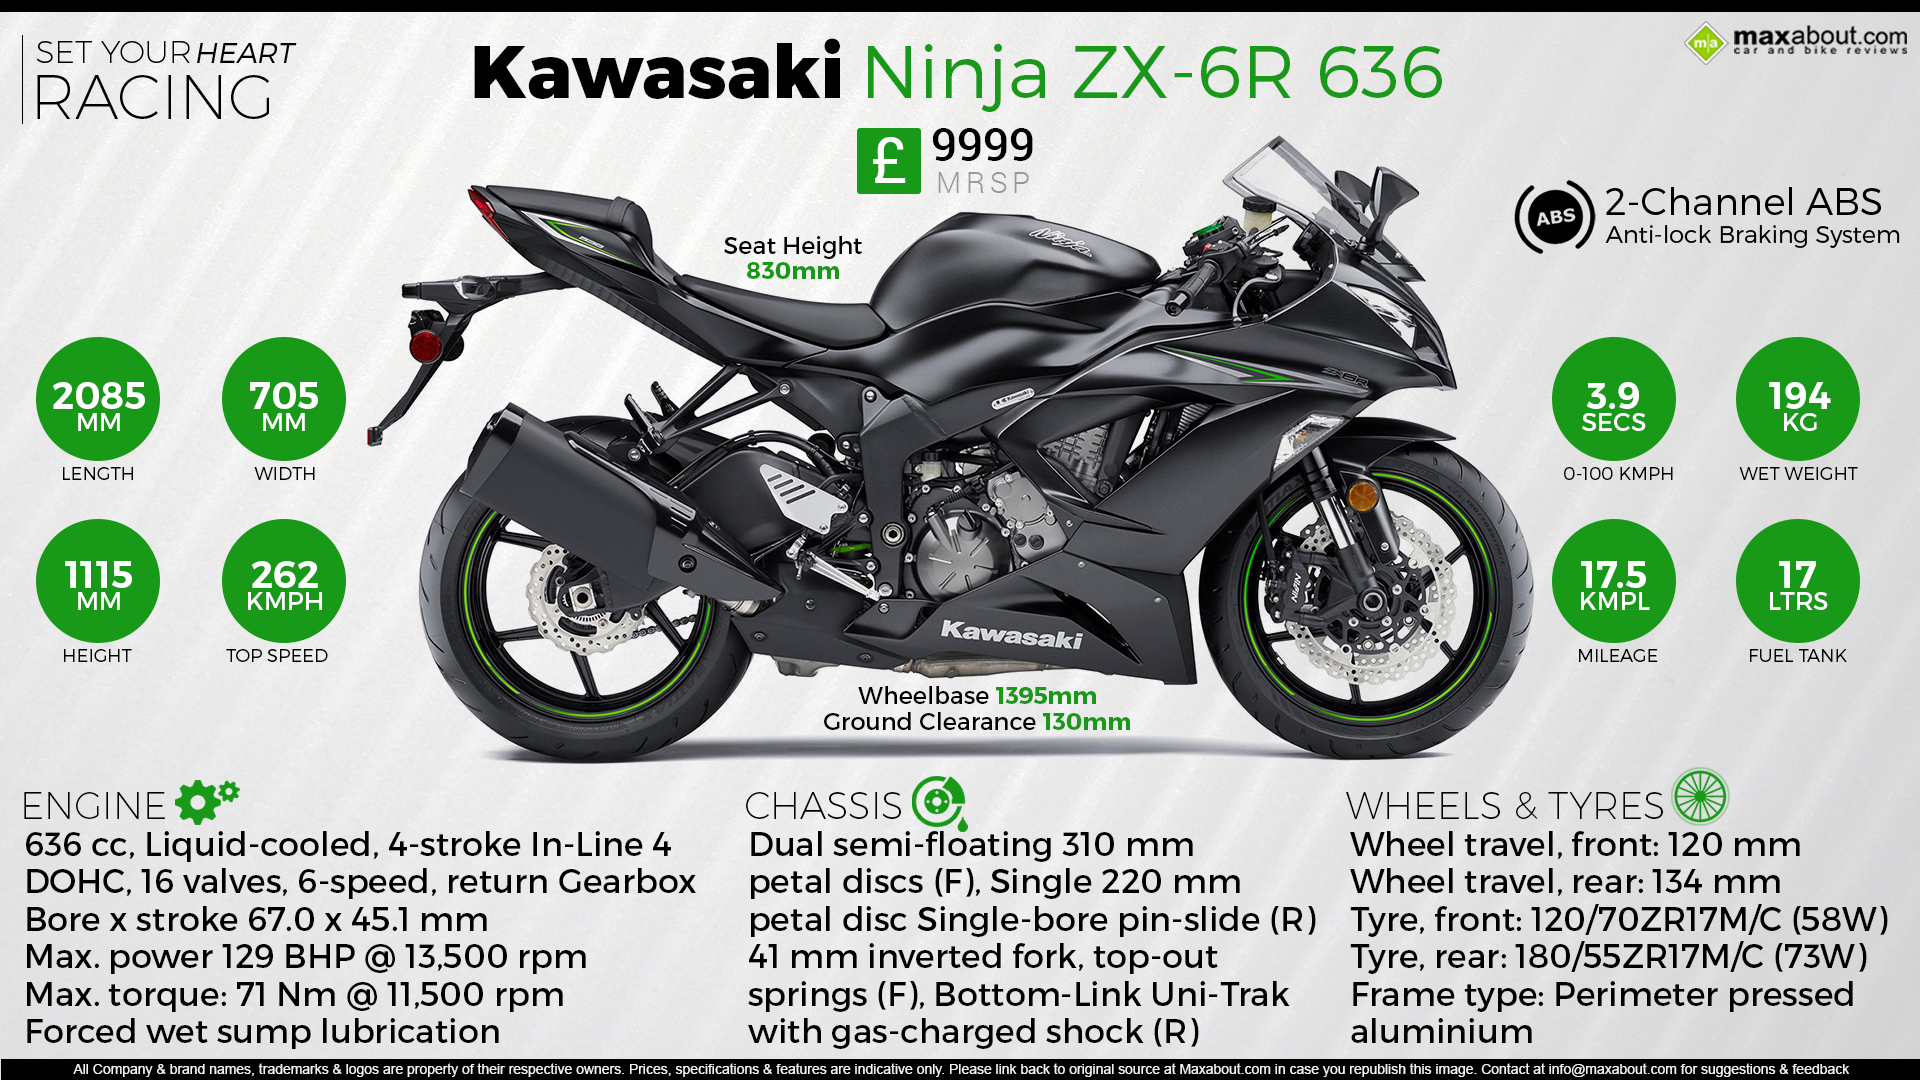 2016 Kawasaki Ninja 636 Set Your Heart